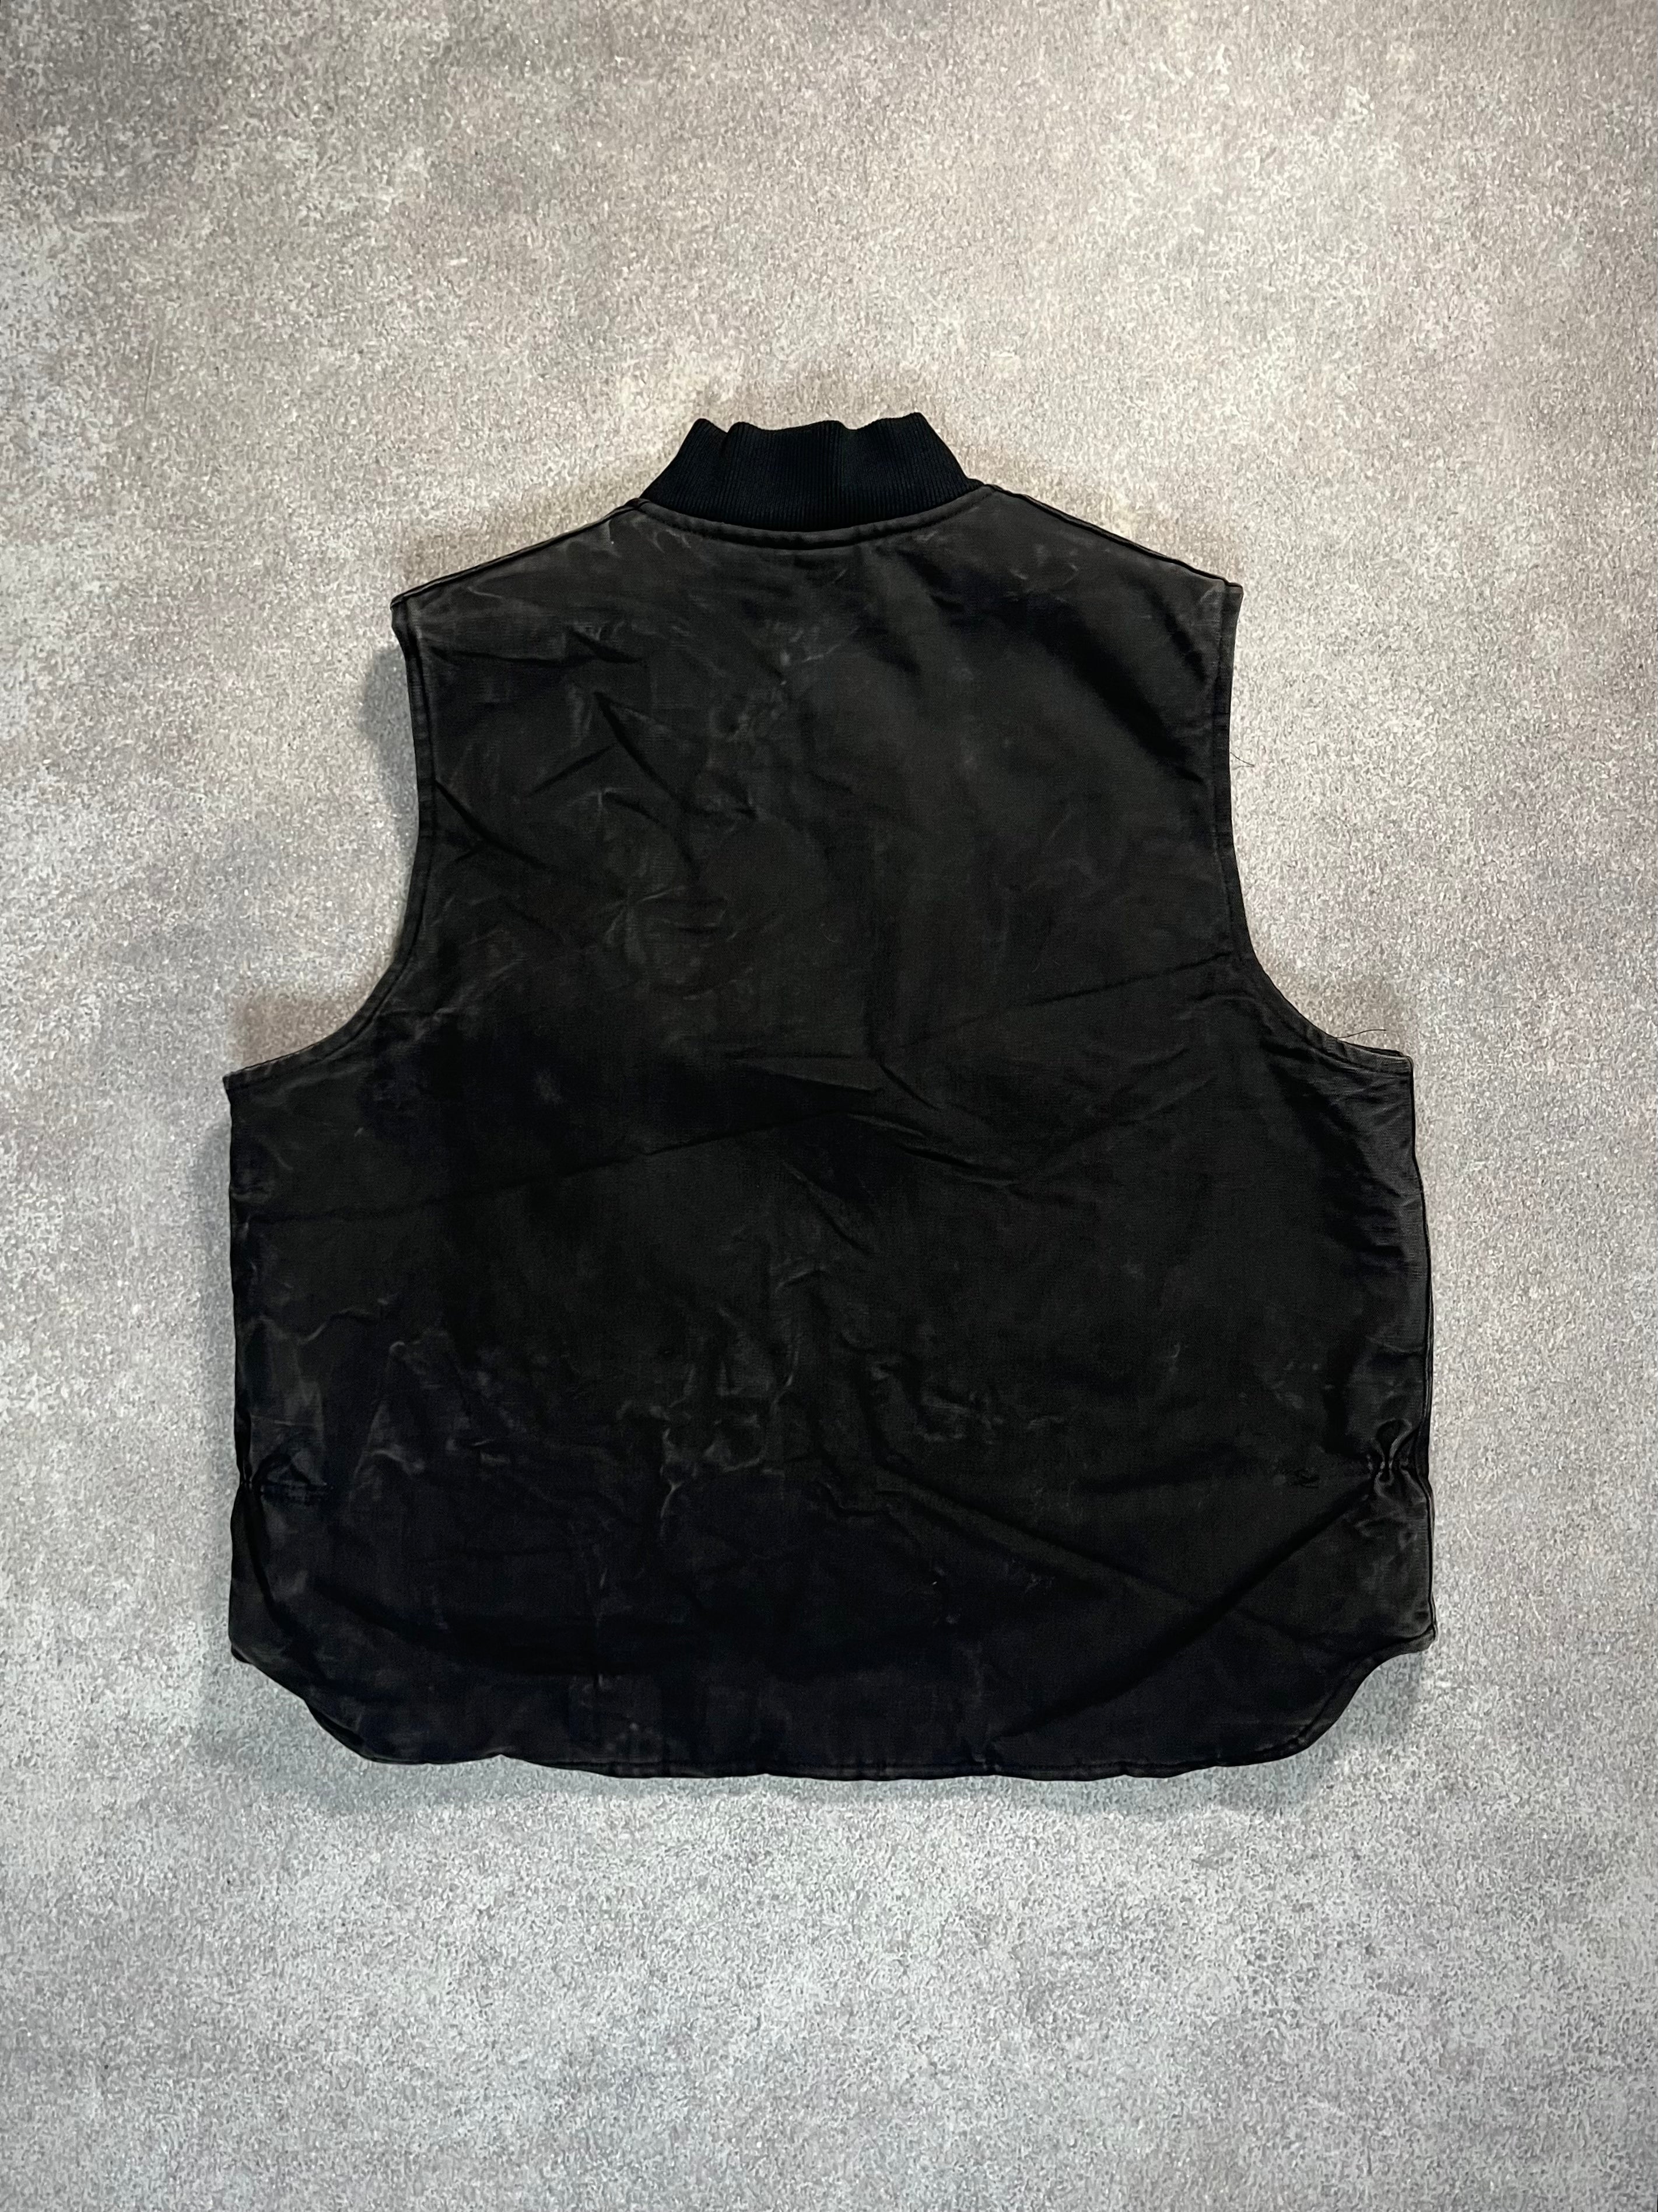 Carhartt Canvas Vest Black // Large - RHAGHOUSE VINTAGE